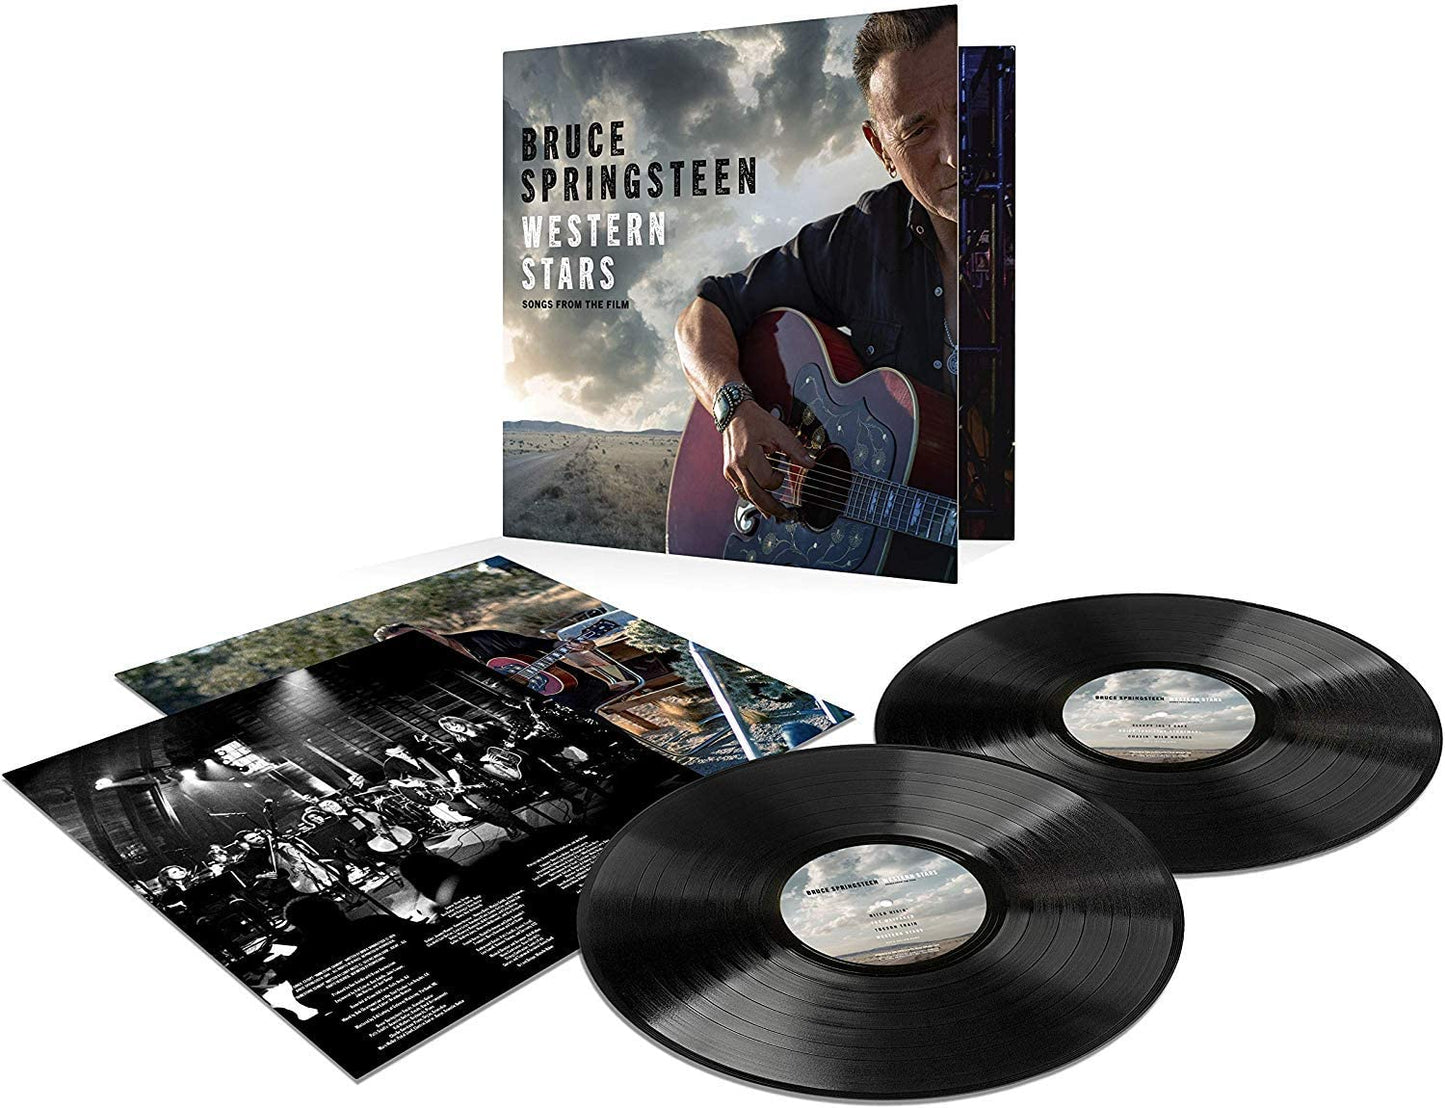 Bruce Springsteen Western Stars (Live)